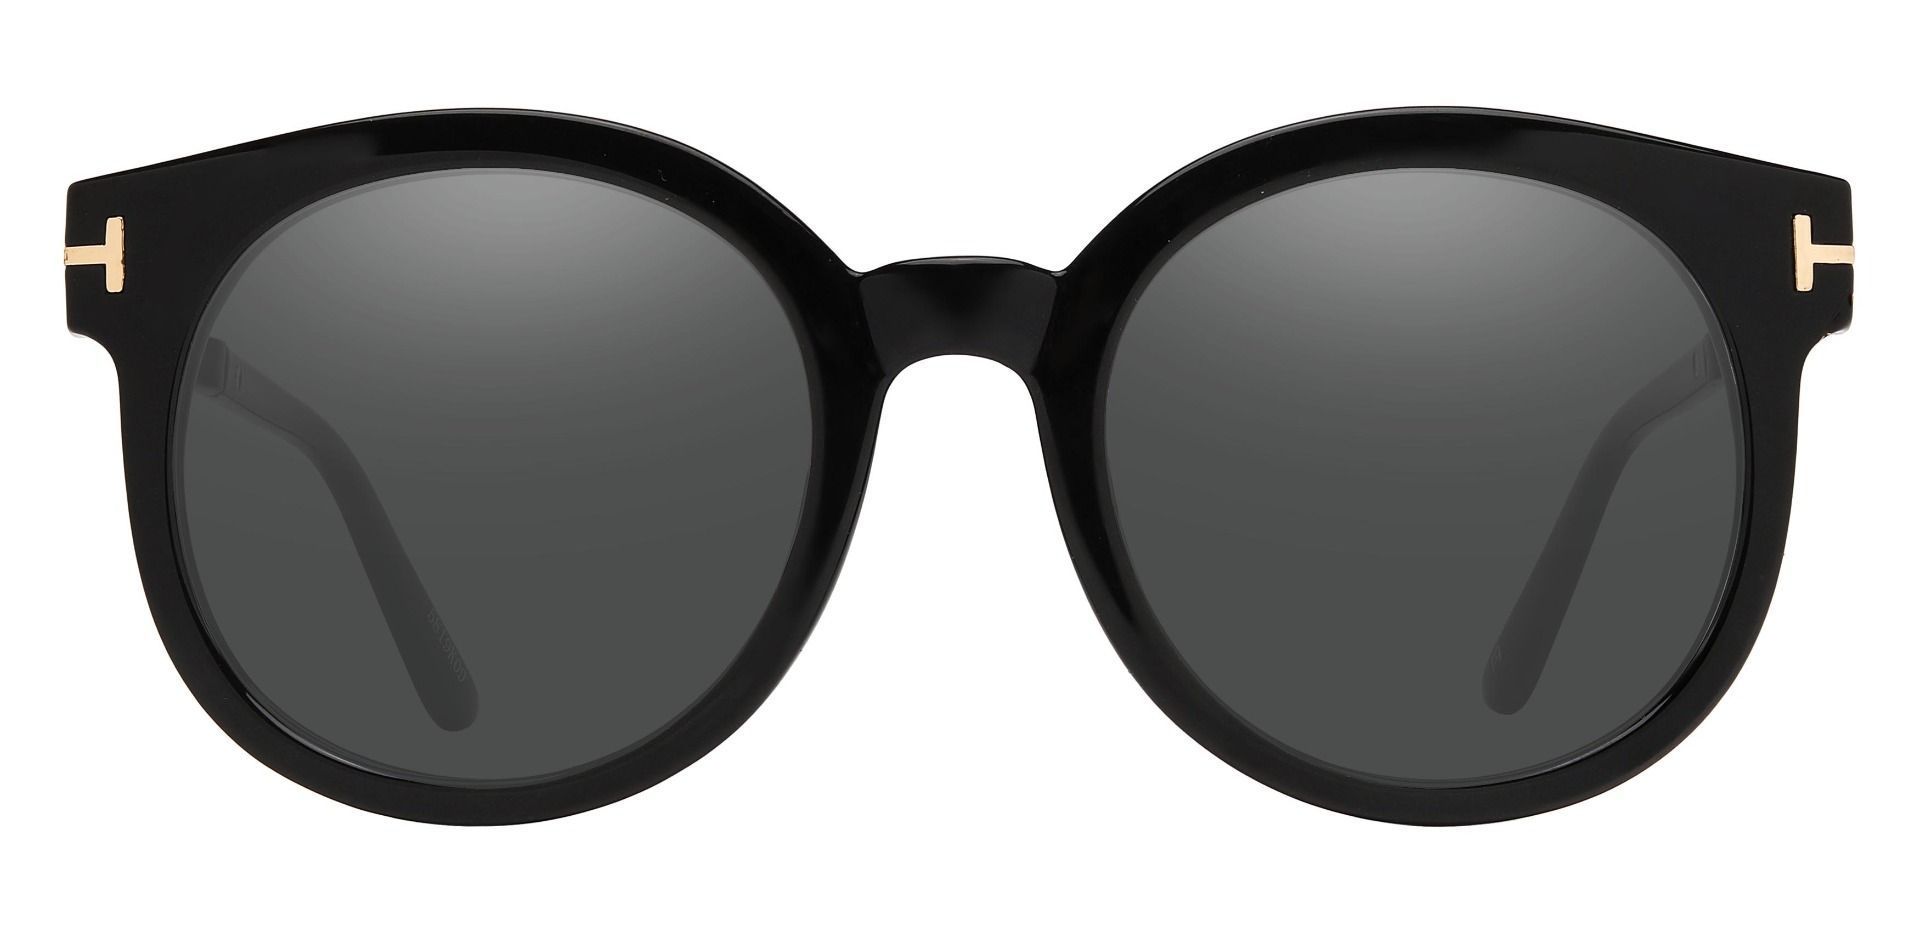 Fortuna Round Non-Rx Sunglasses - Black Frame With Gray Lenses